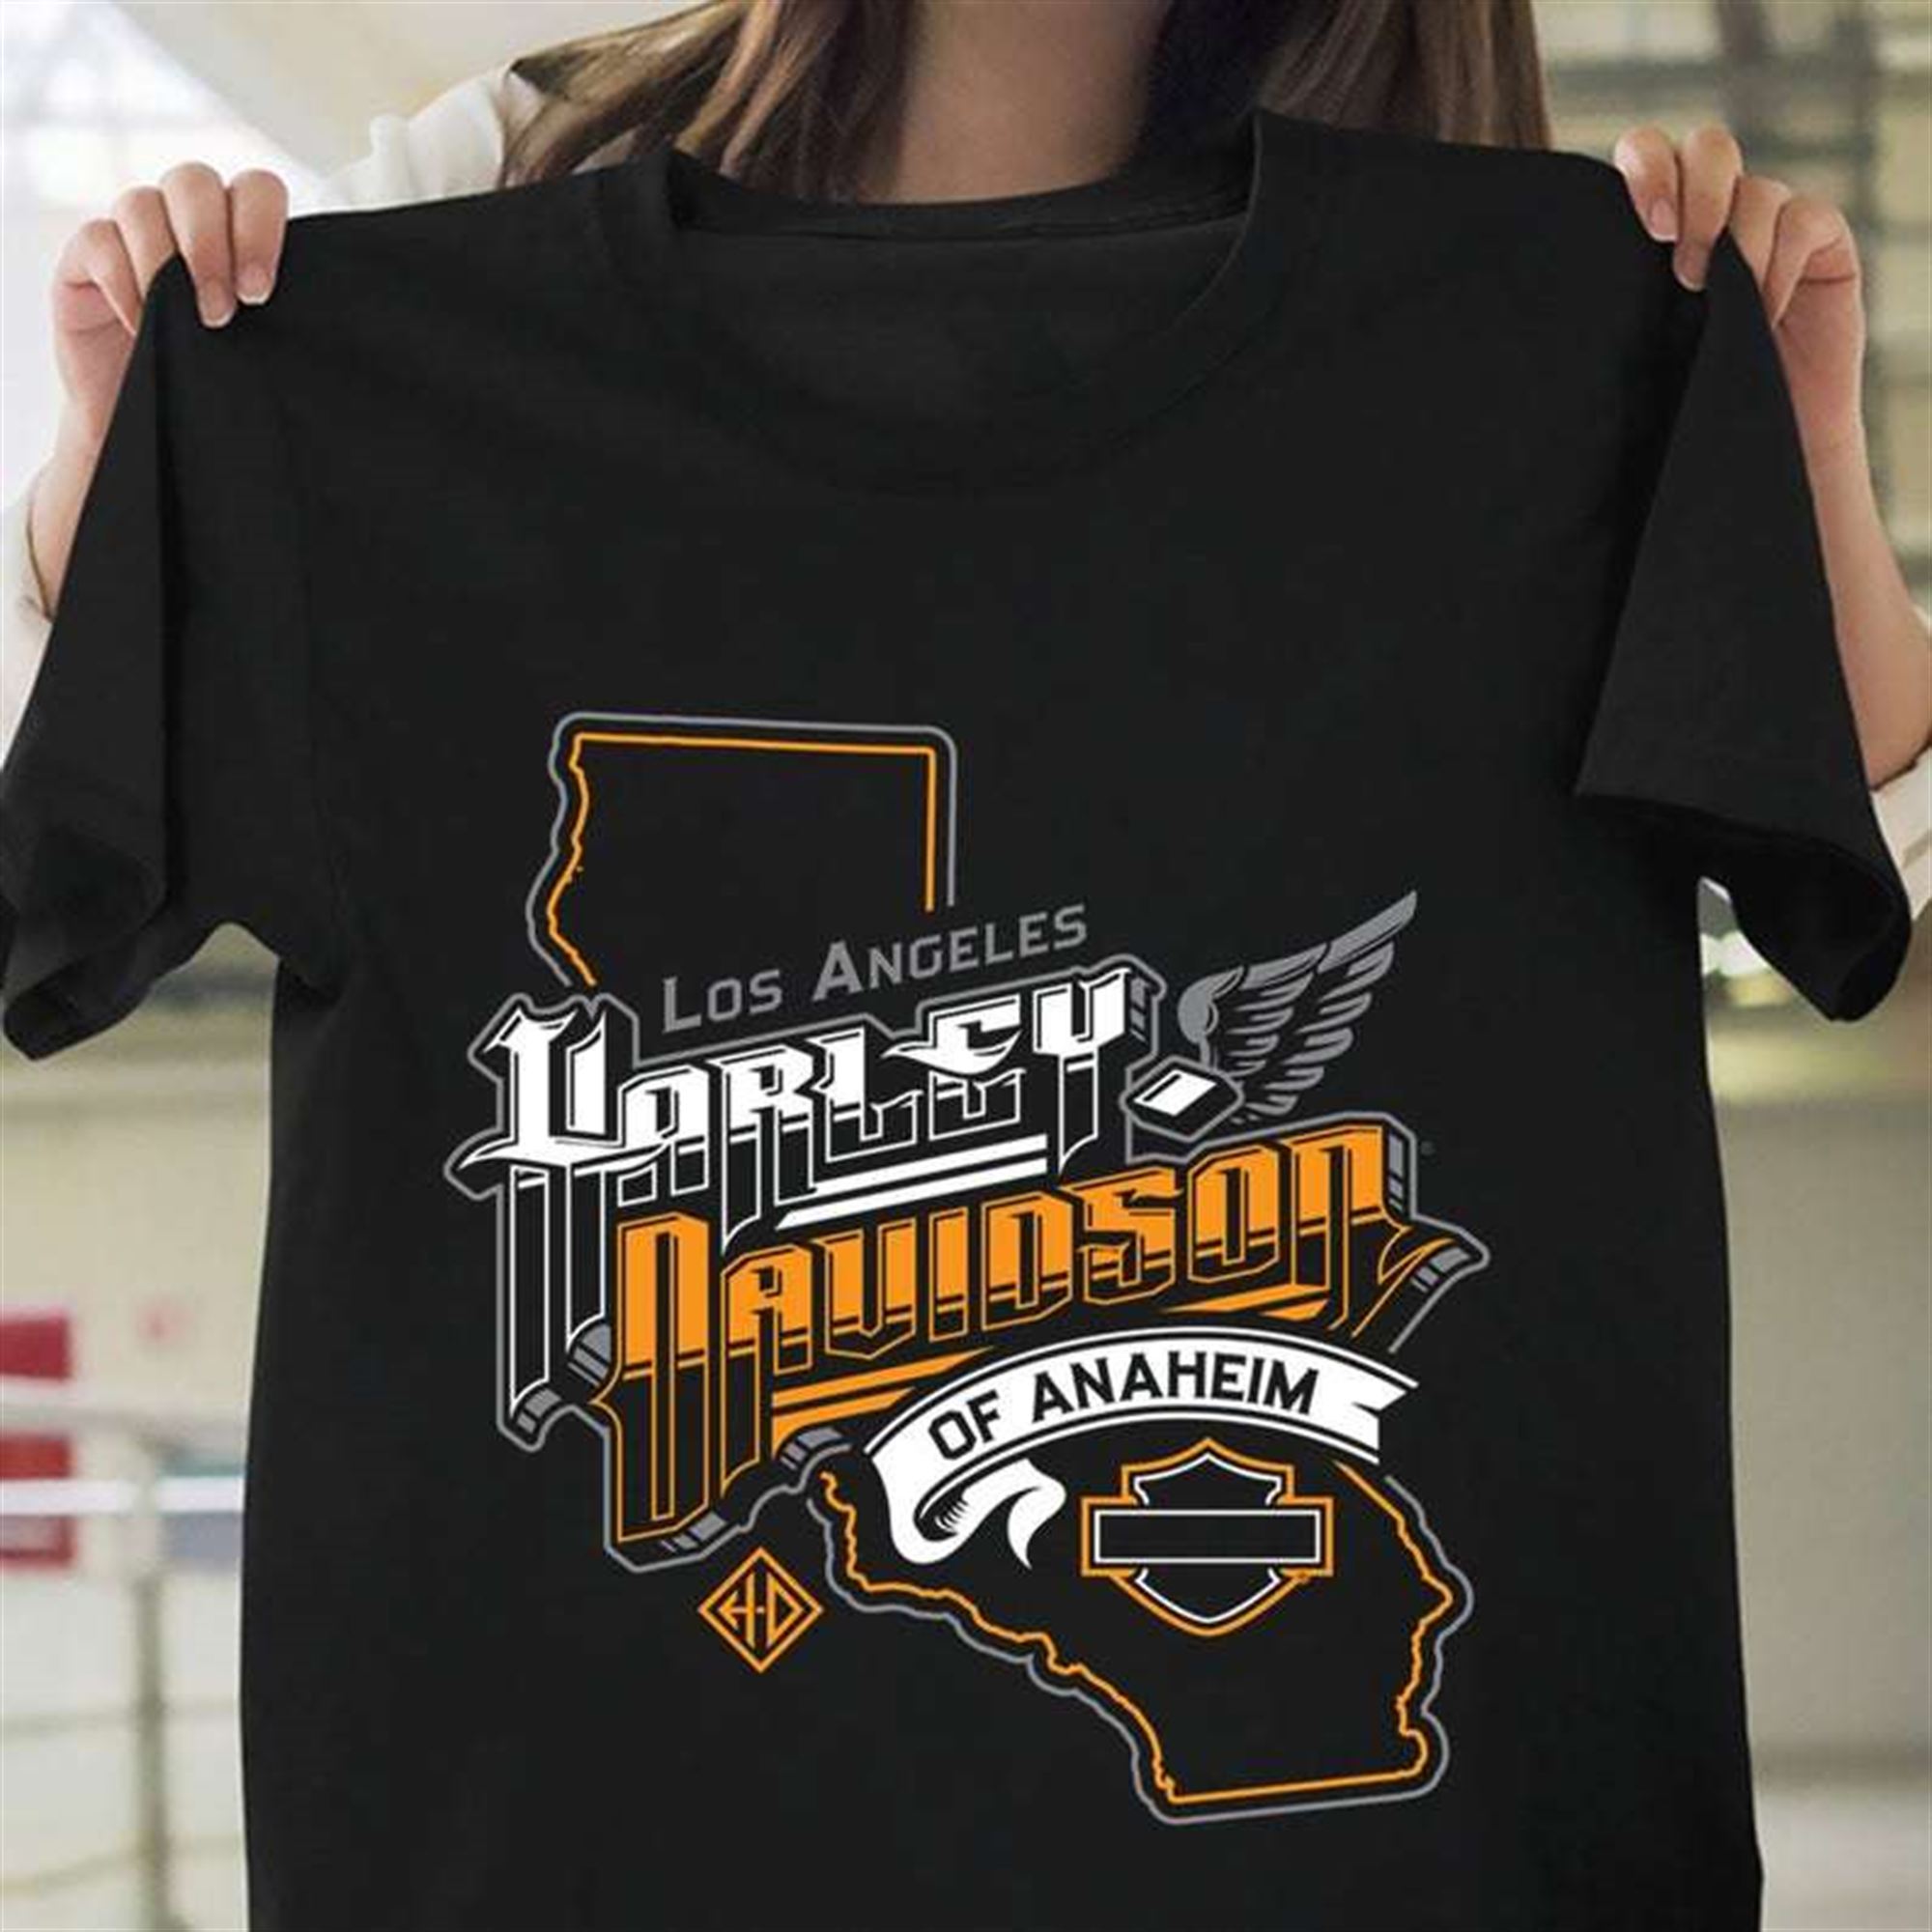 Los Angeles Harley Davidson Of Anaheim Unisex Black T-shirt Plus Size Up To 5x